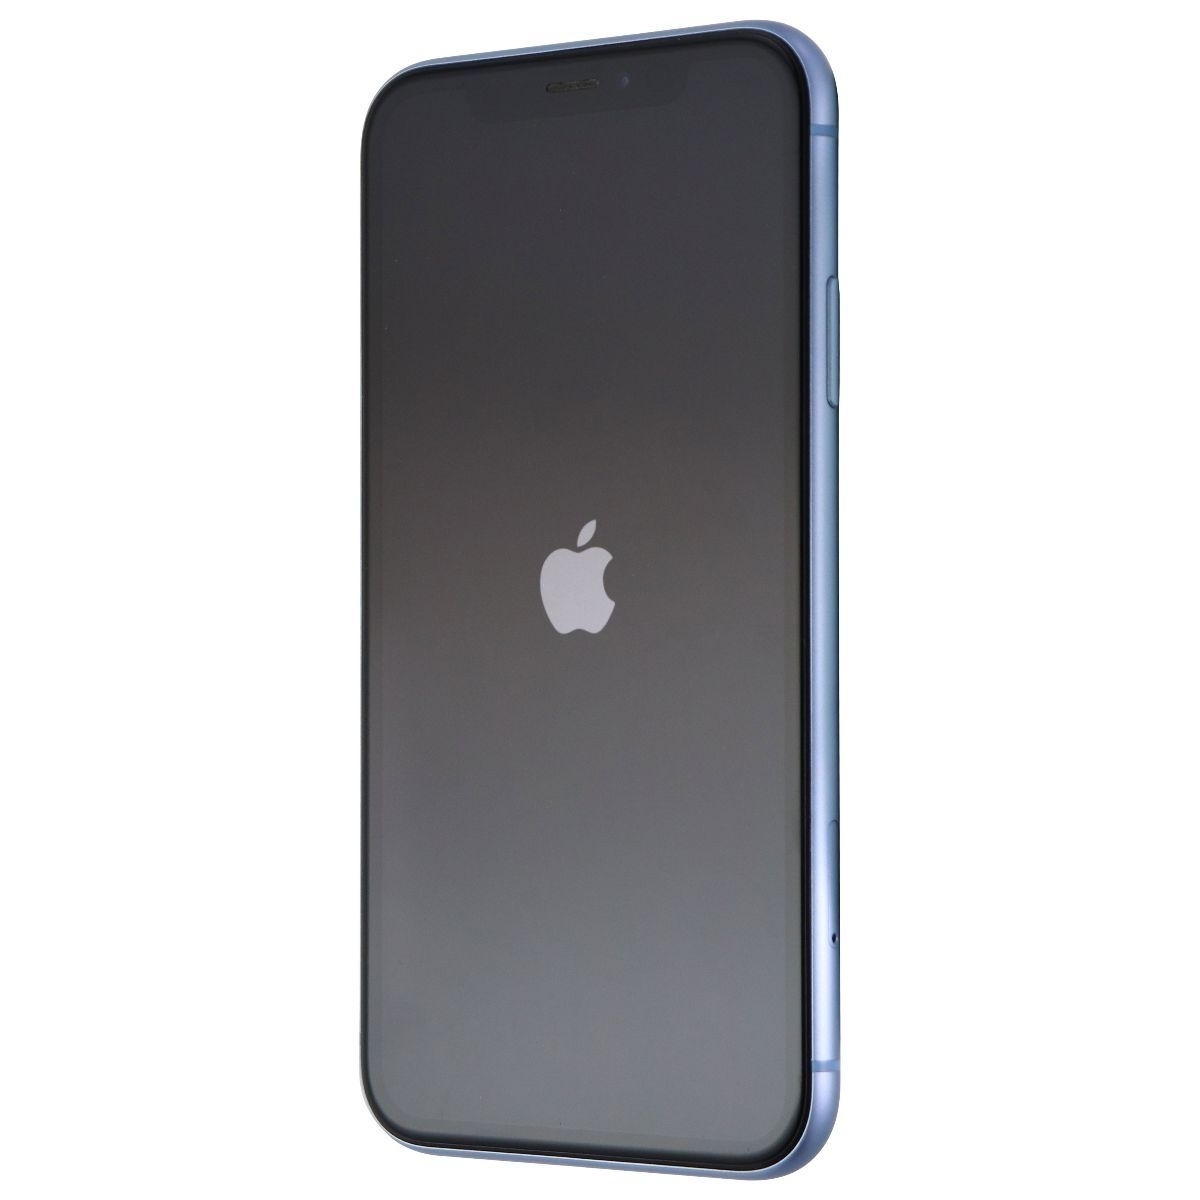 Apple IPhone XR (6.1-inch) (A1984) Unlocked - 64GB / Blue - Bad Face ID*